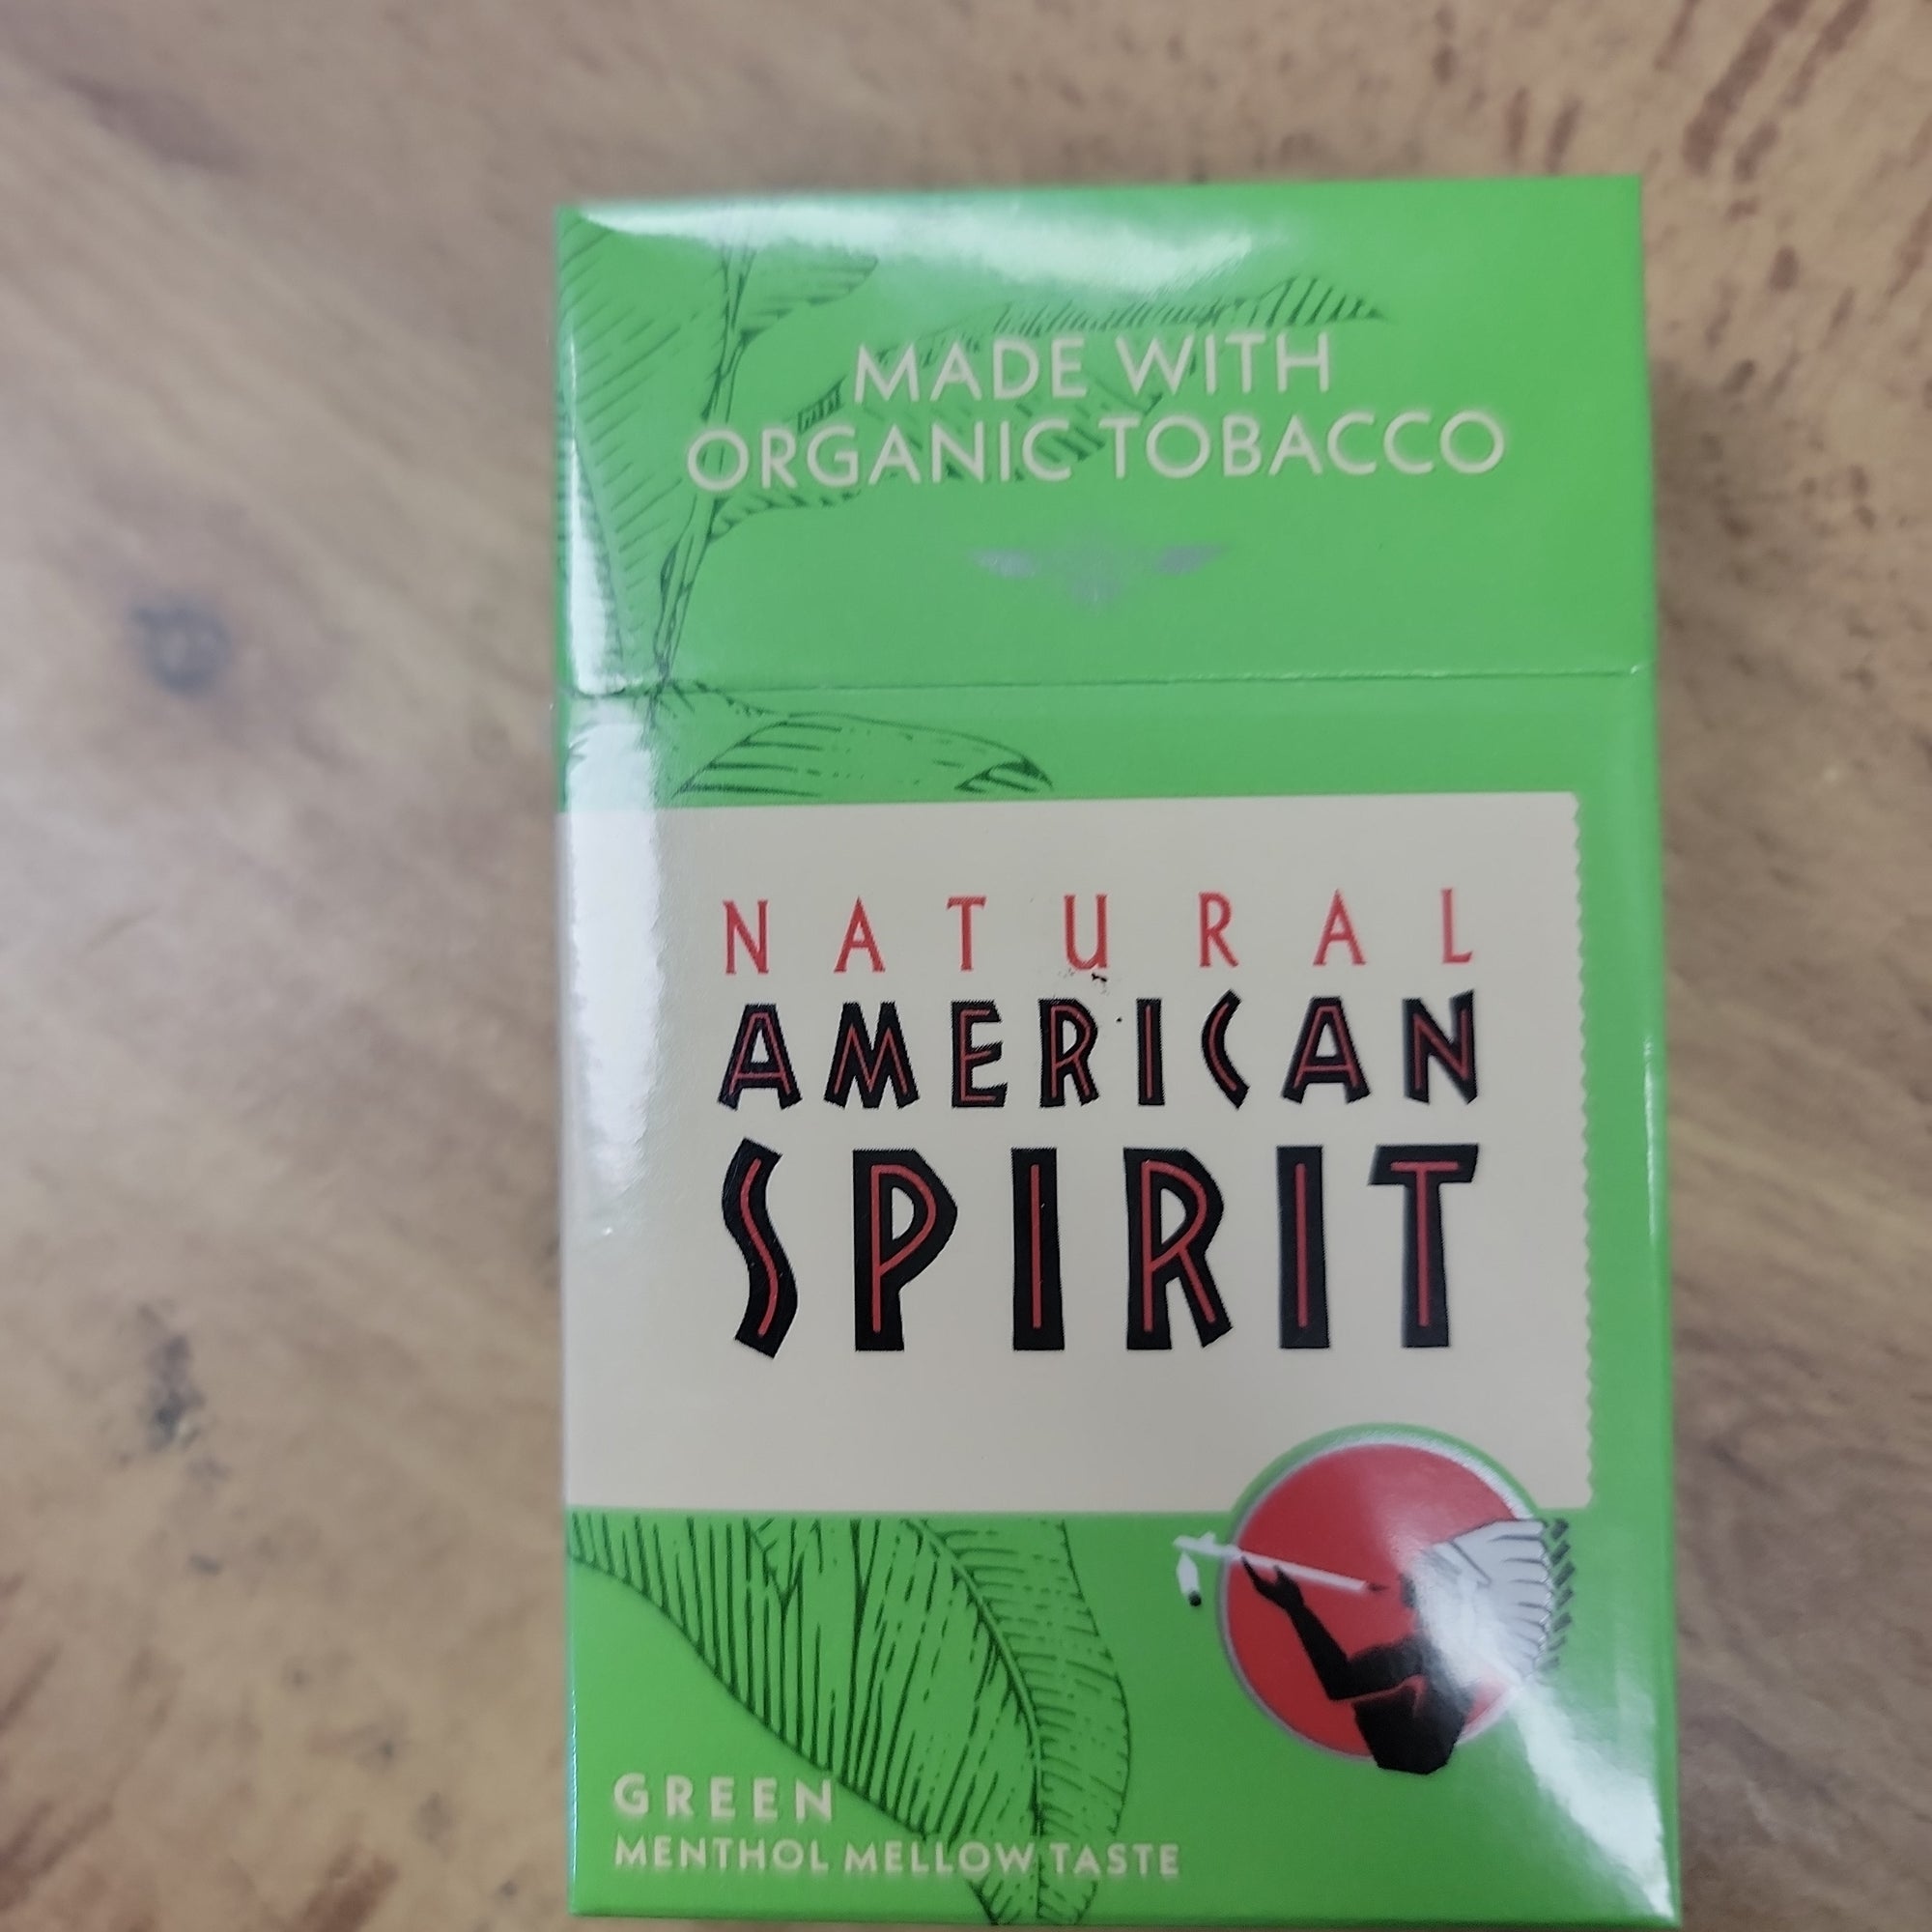 American spirit green